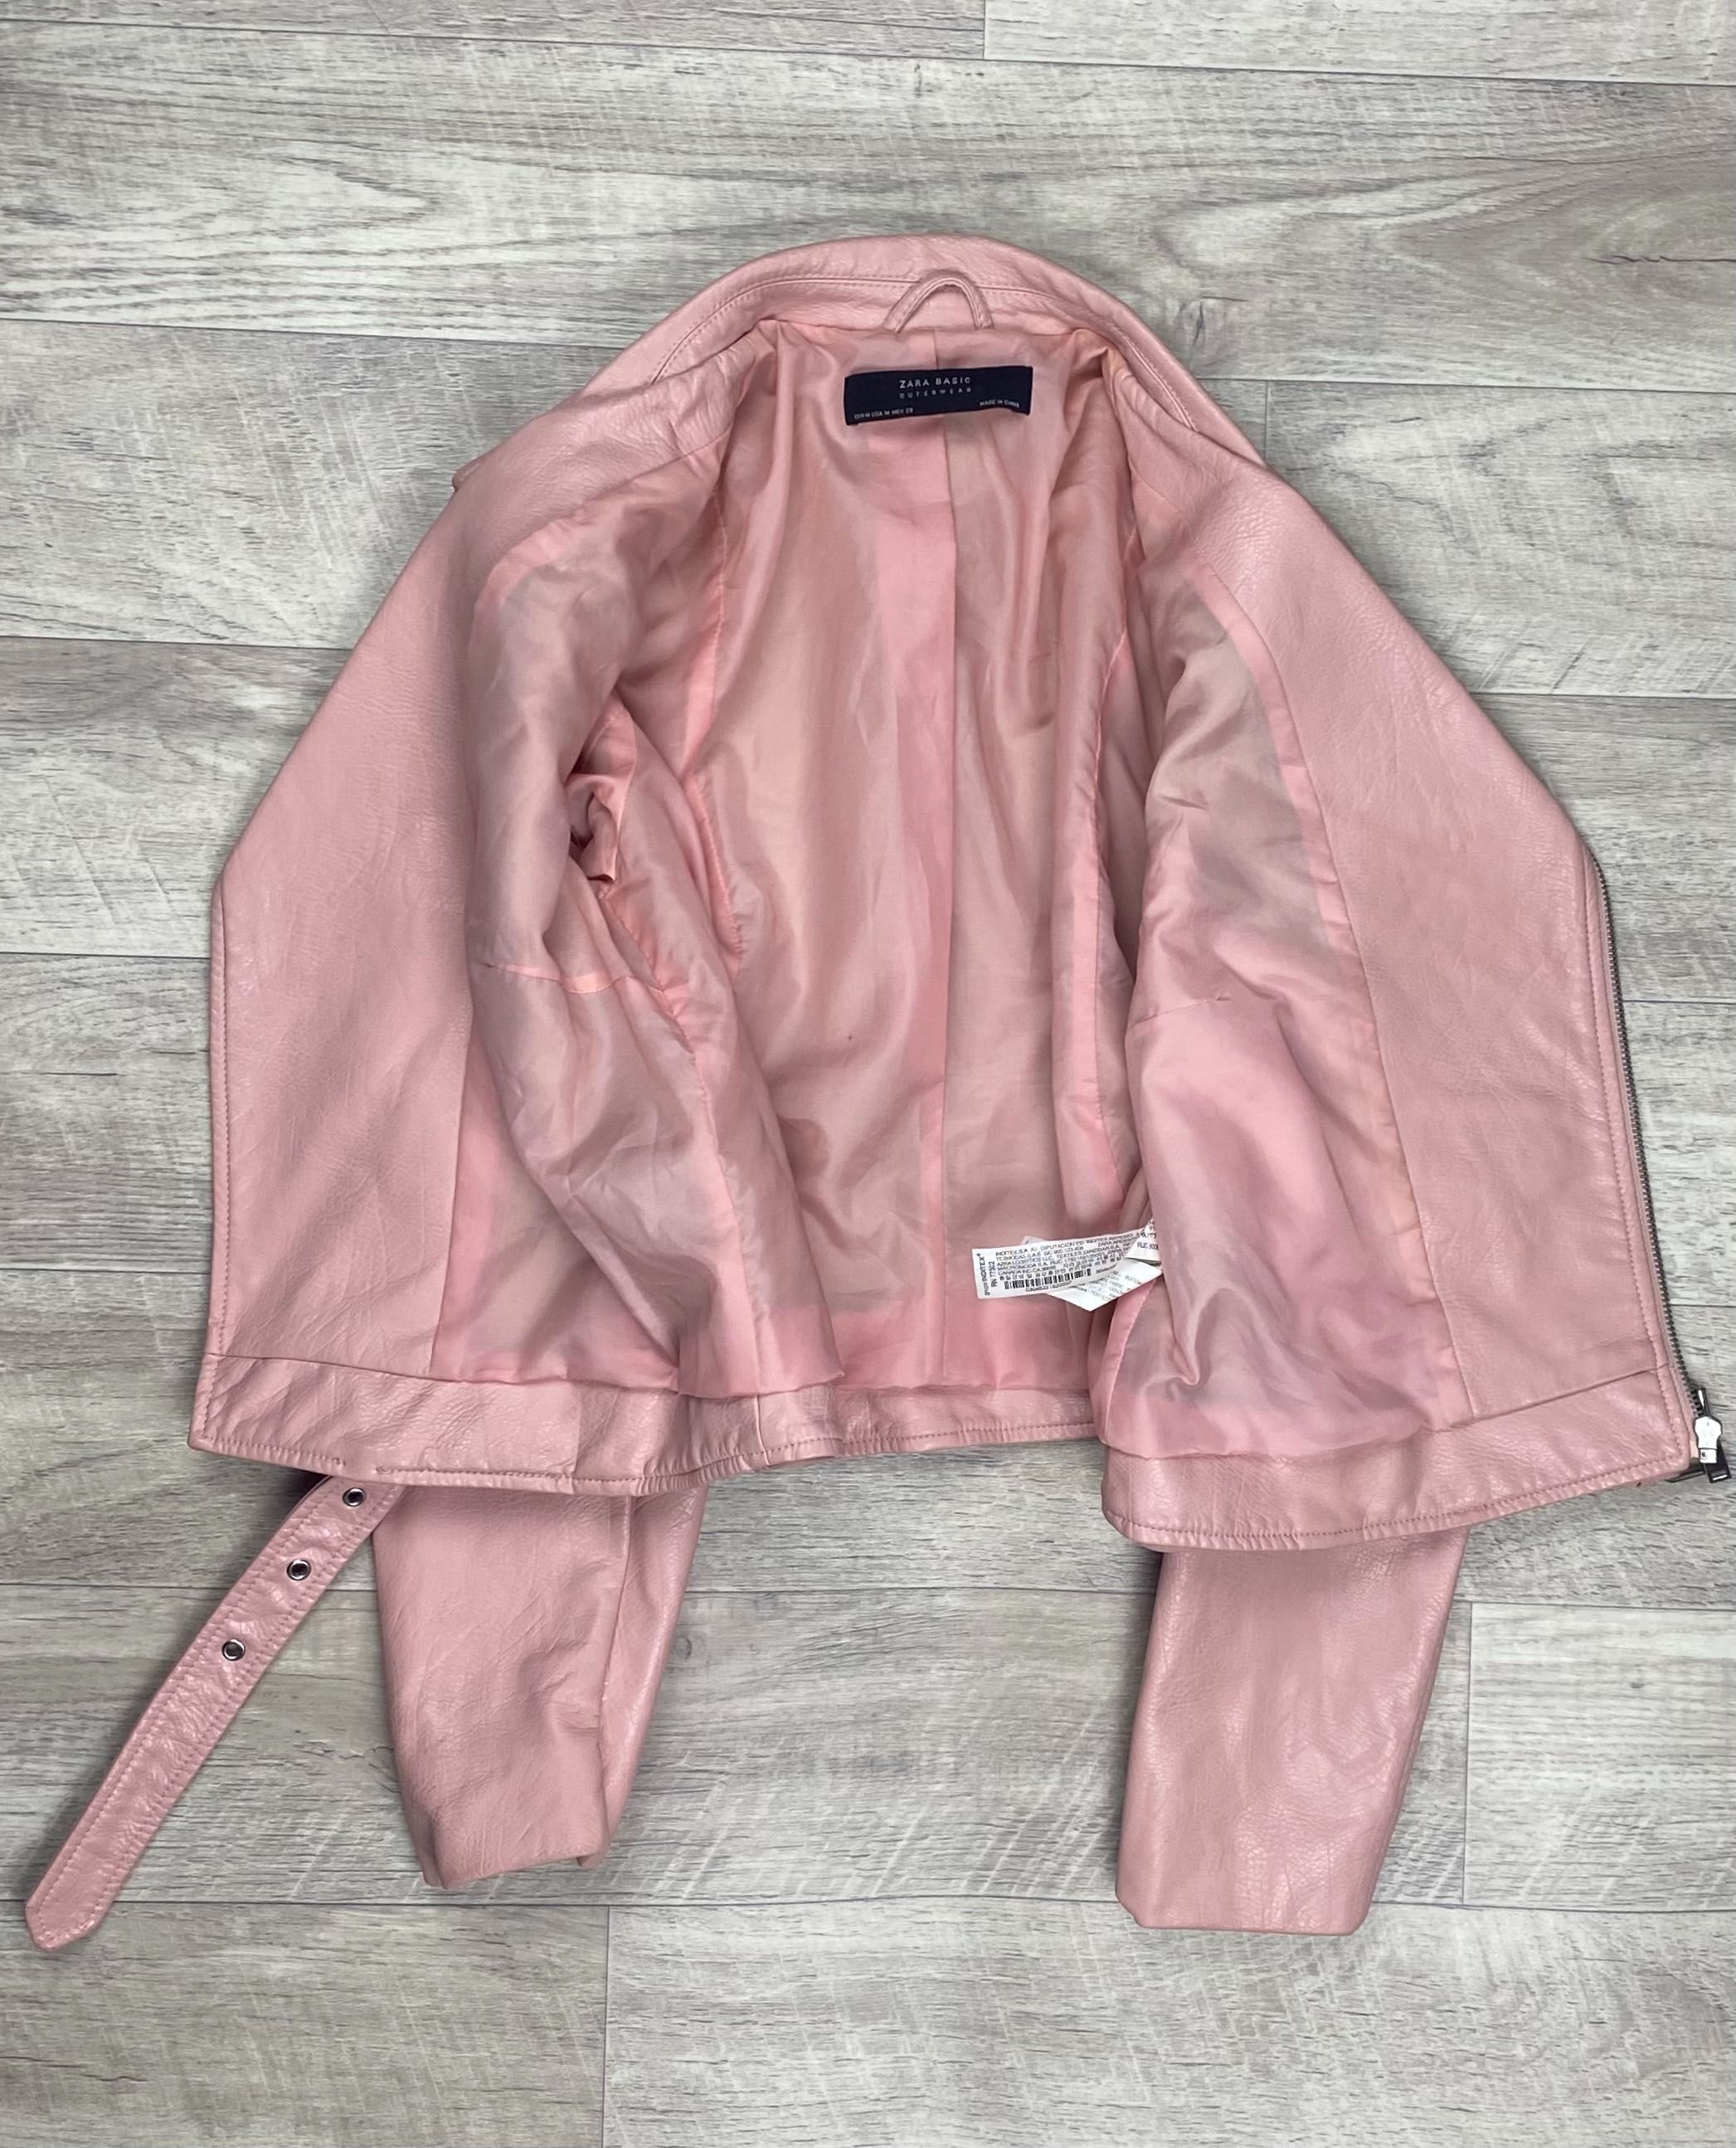 Zara basic куртка косуха м размер женская короткая оригинал